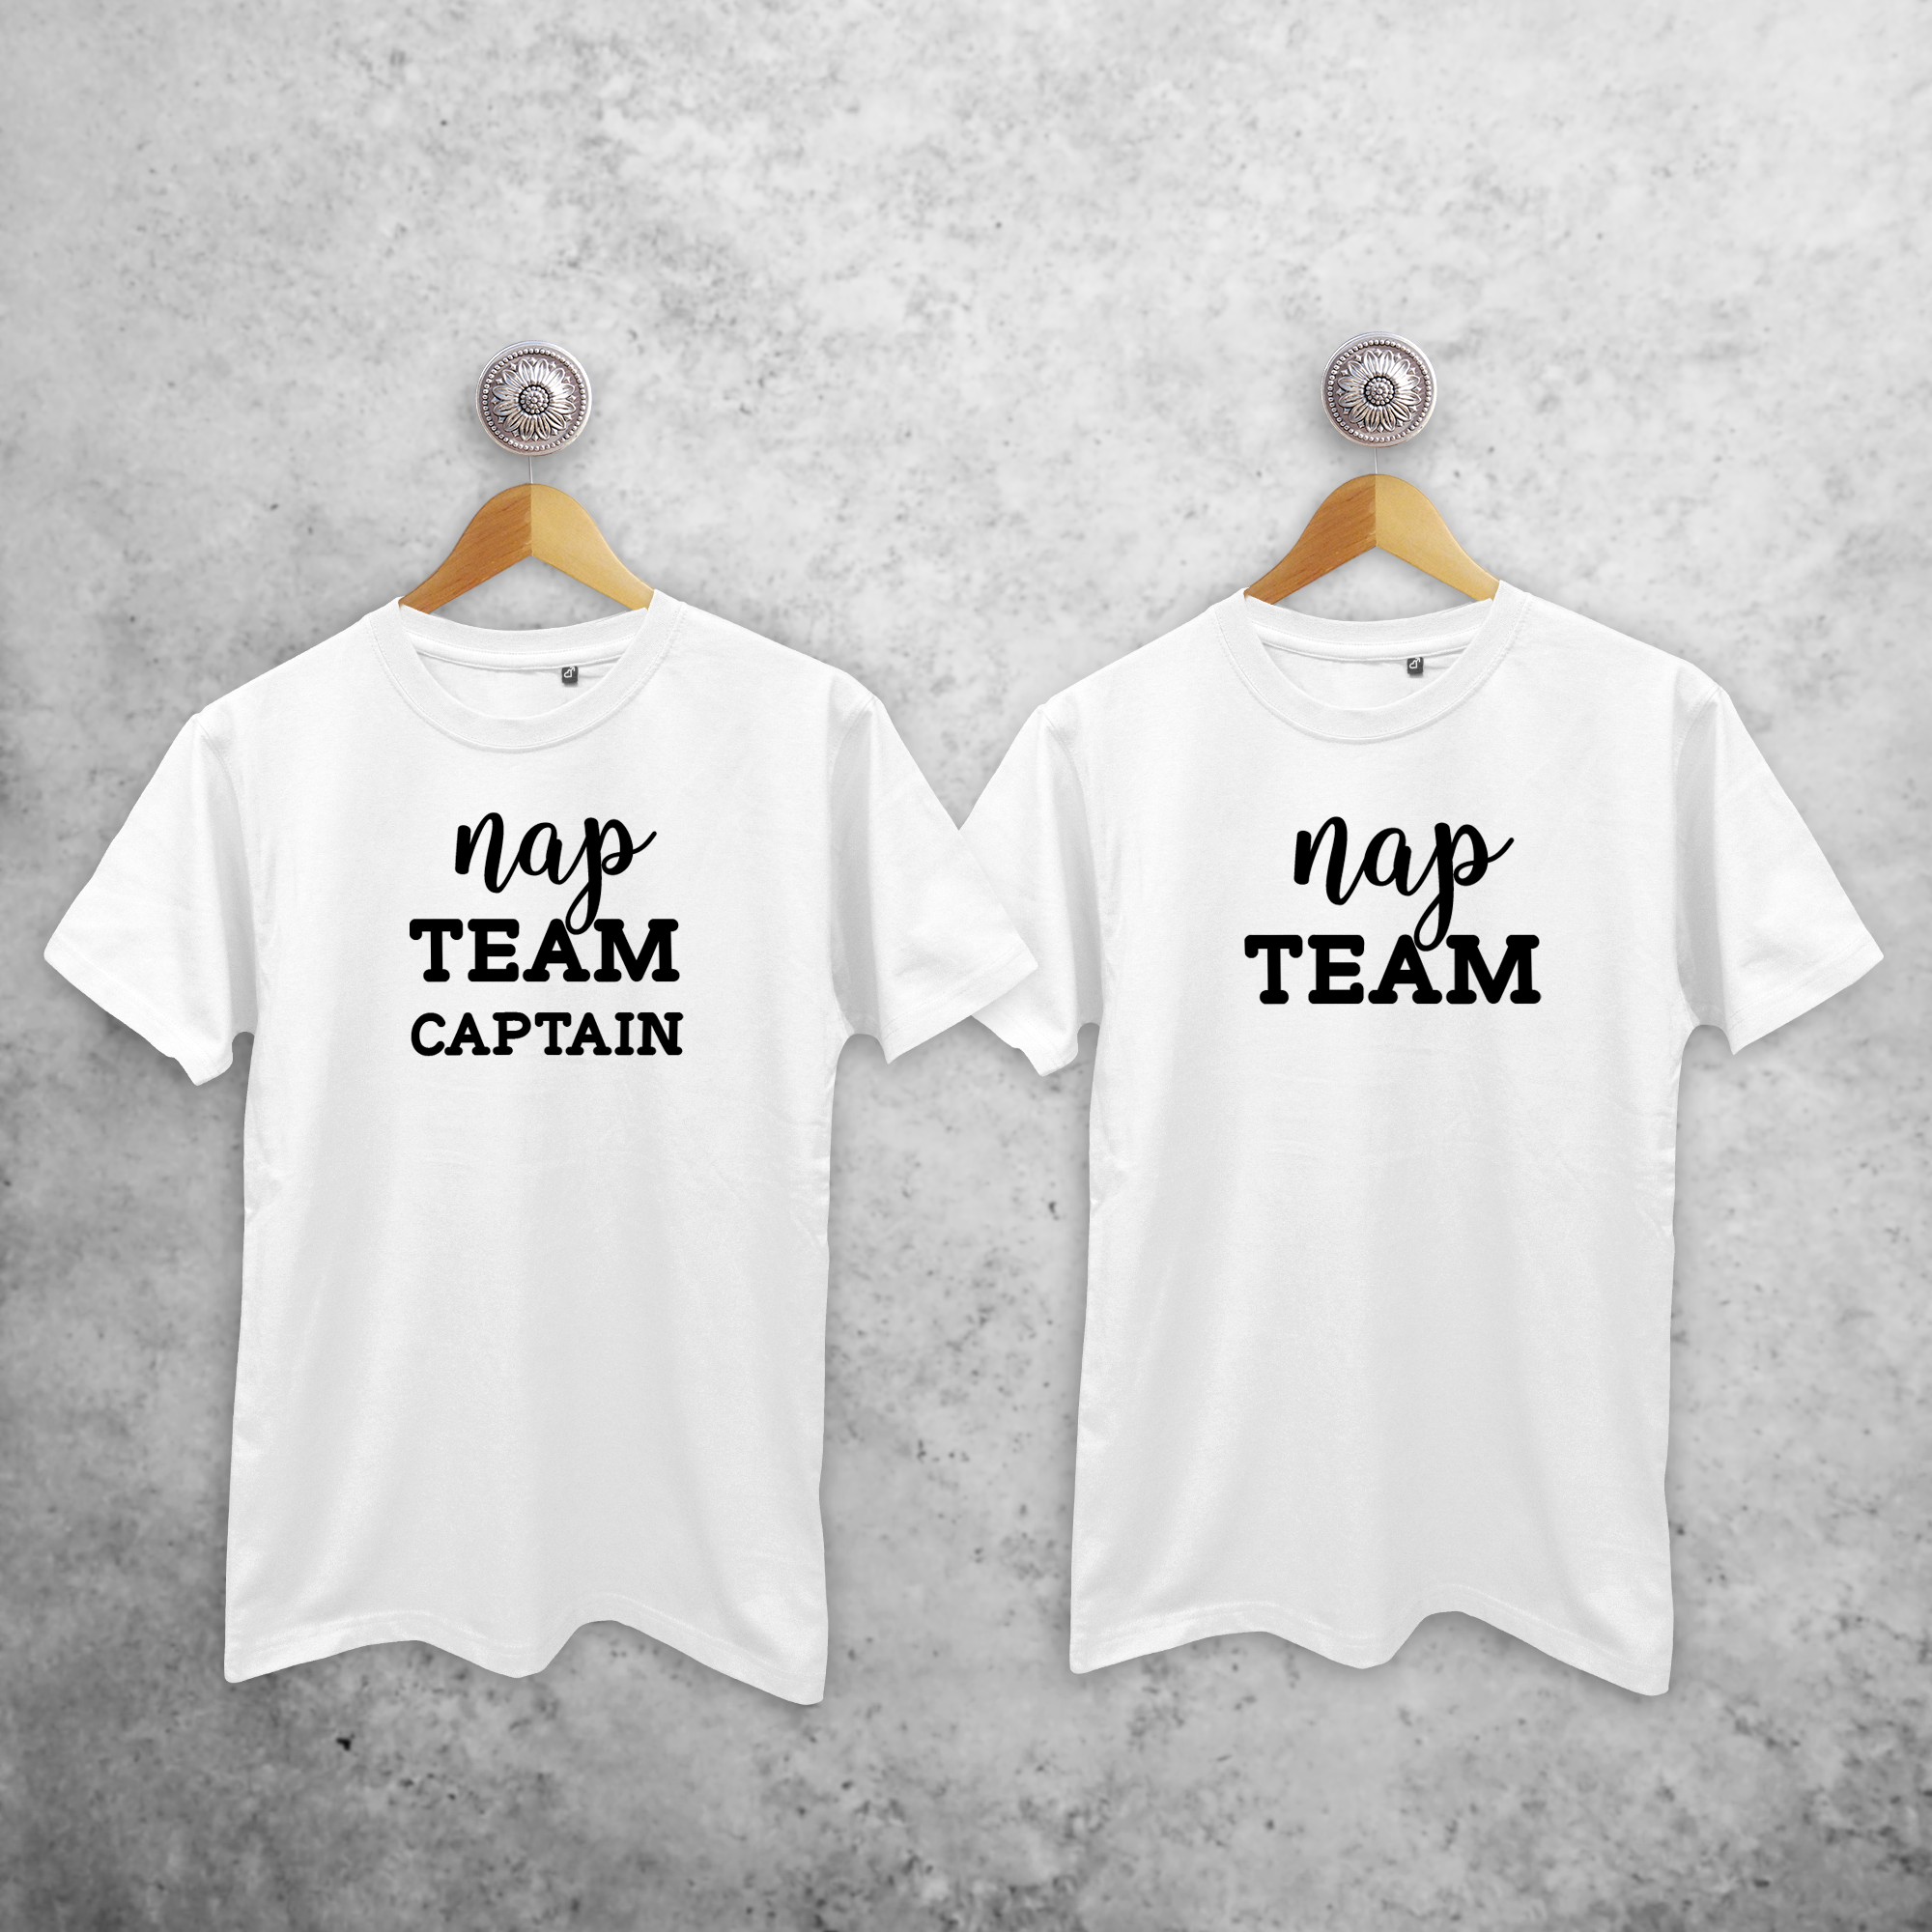 'Nap team captain' & 'Nap team' koppel shirts